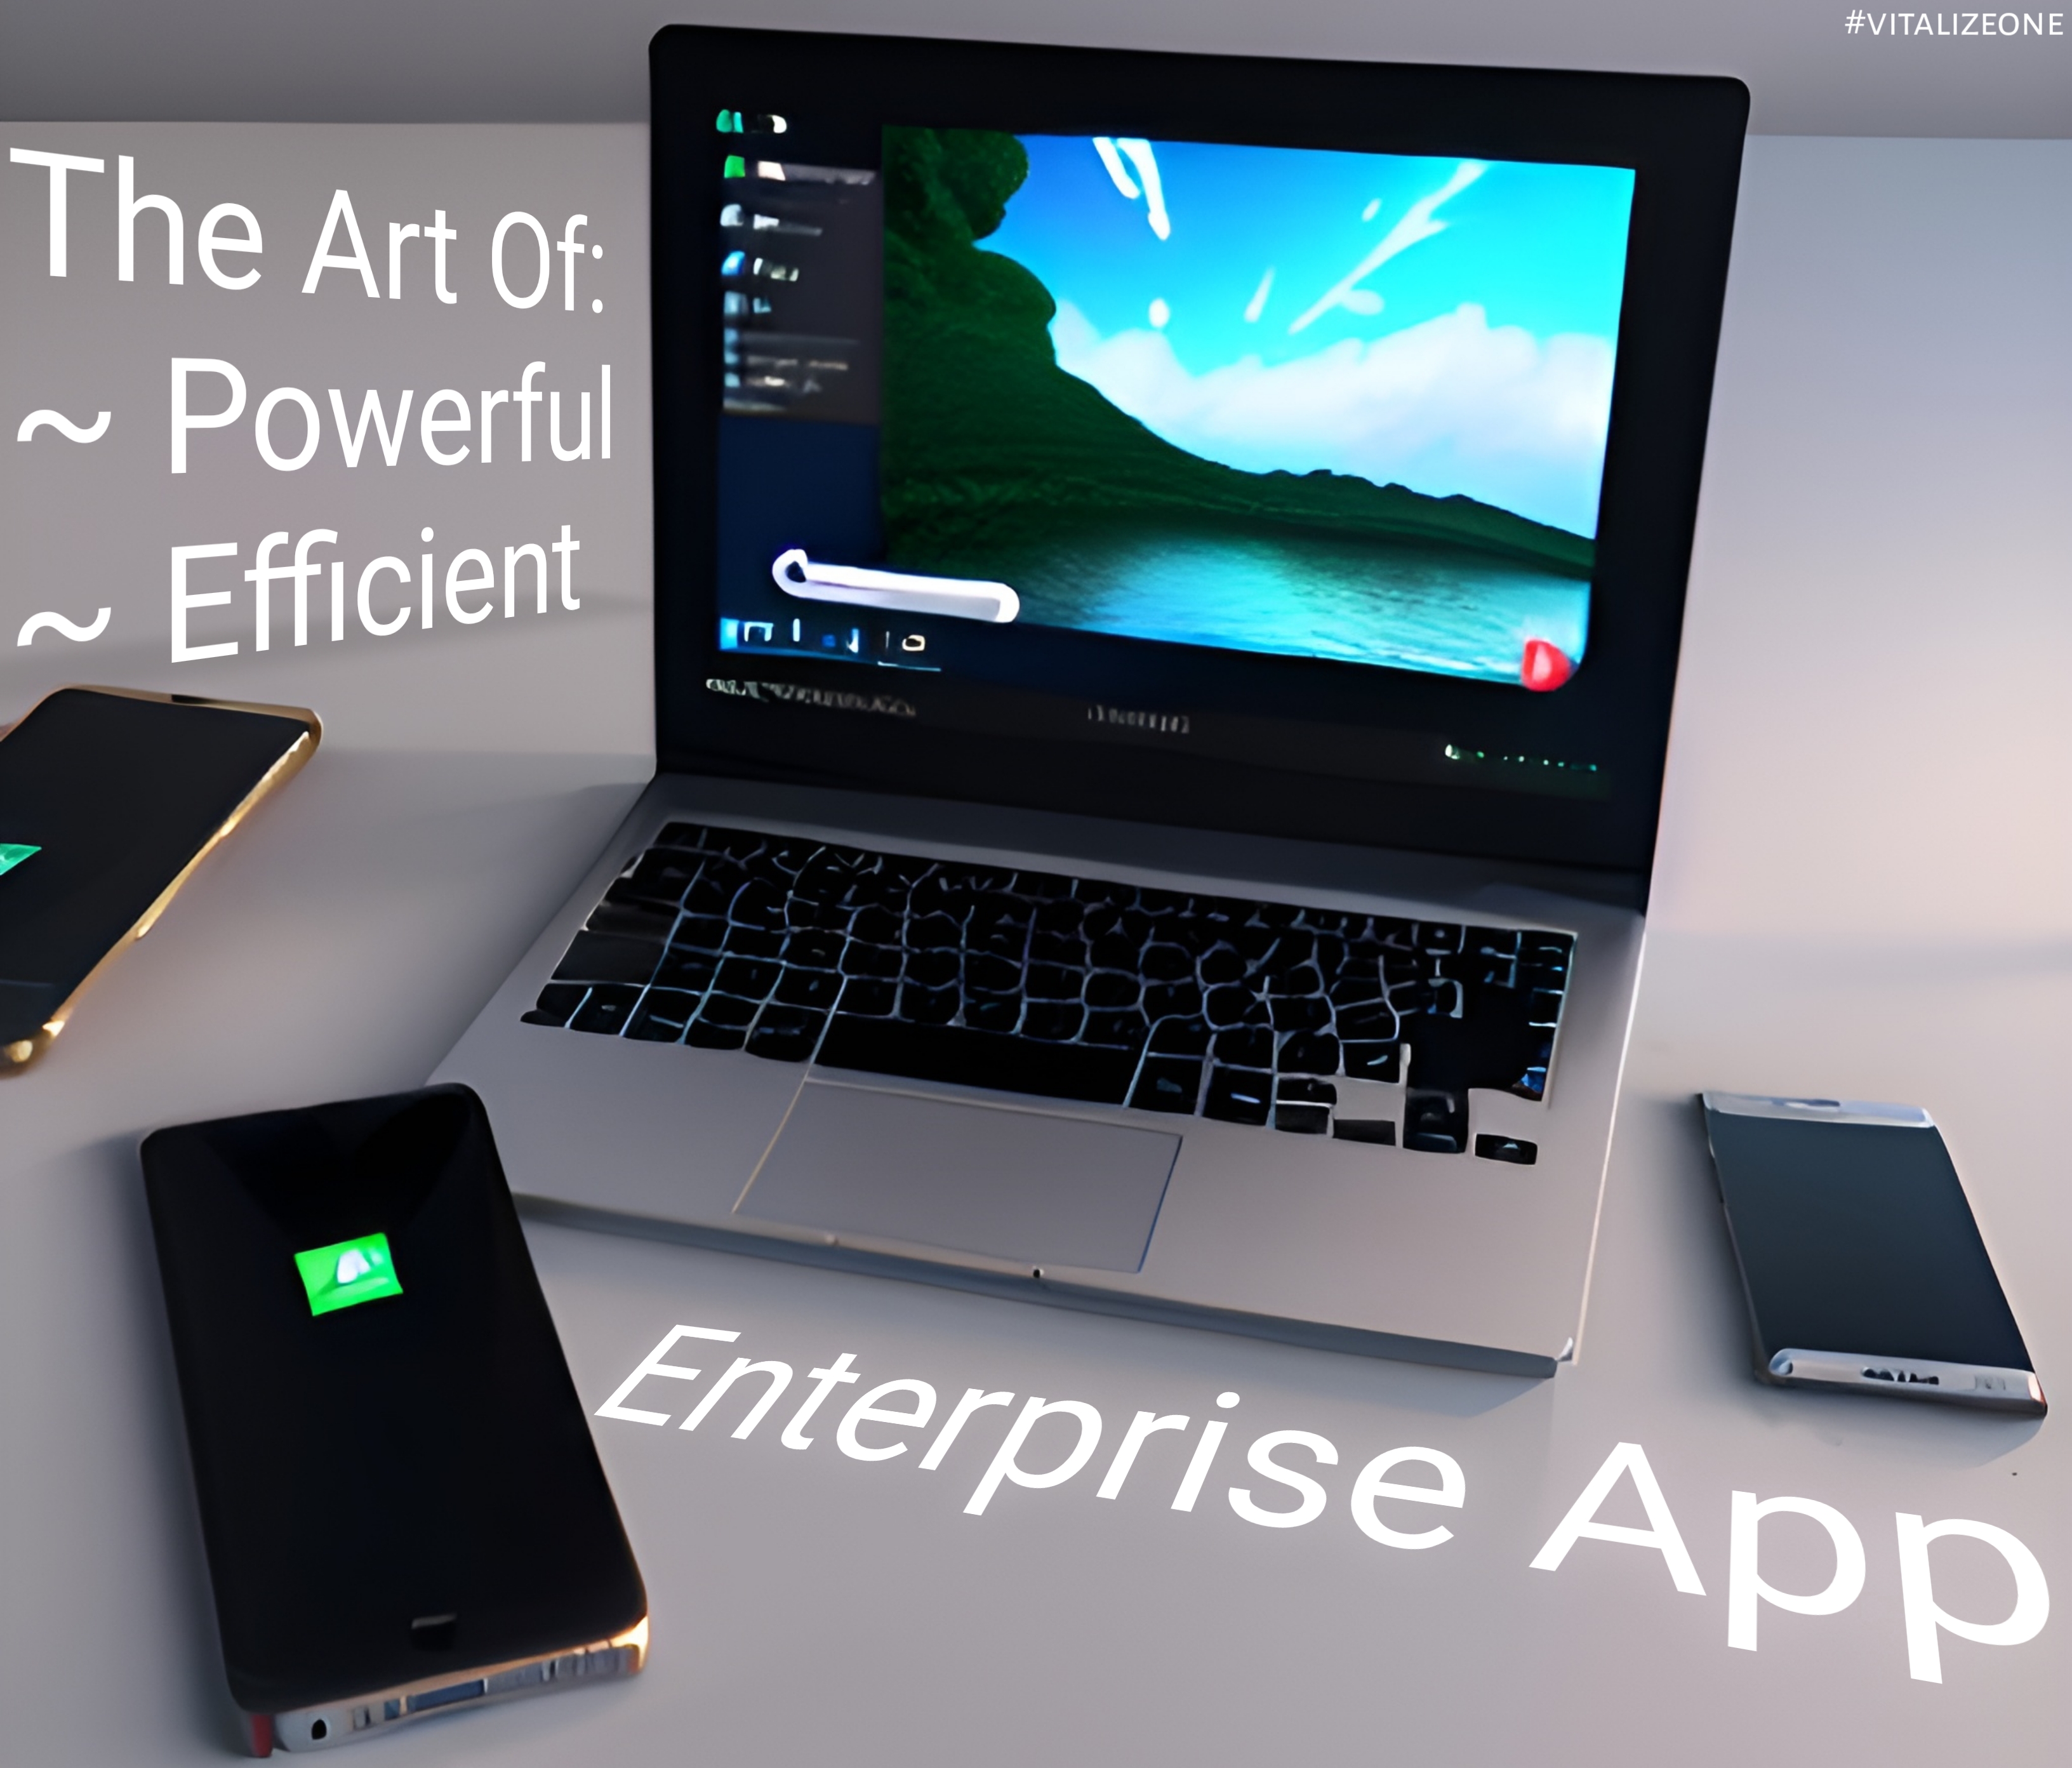 The Art of Creating Powerful and Efficient Enterprise App | VitalyTennant.com | #vitalizeone 1